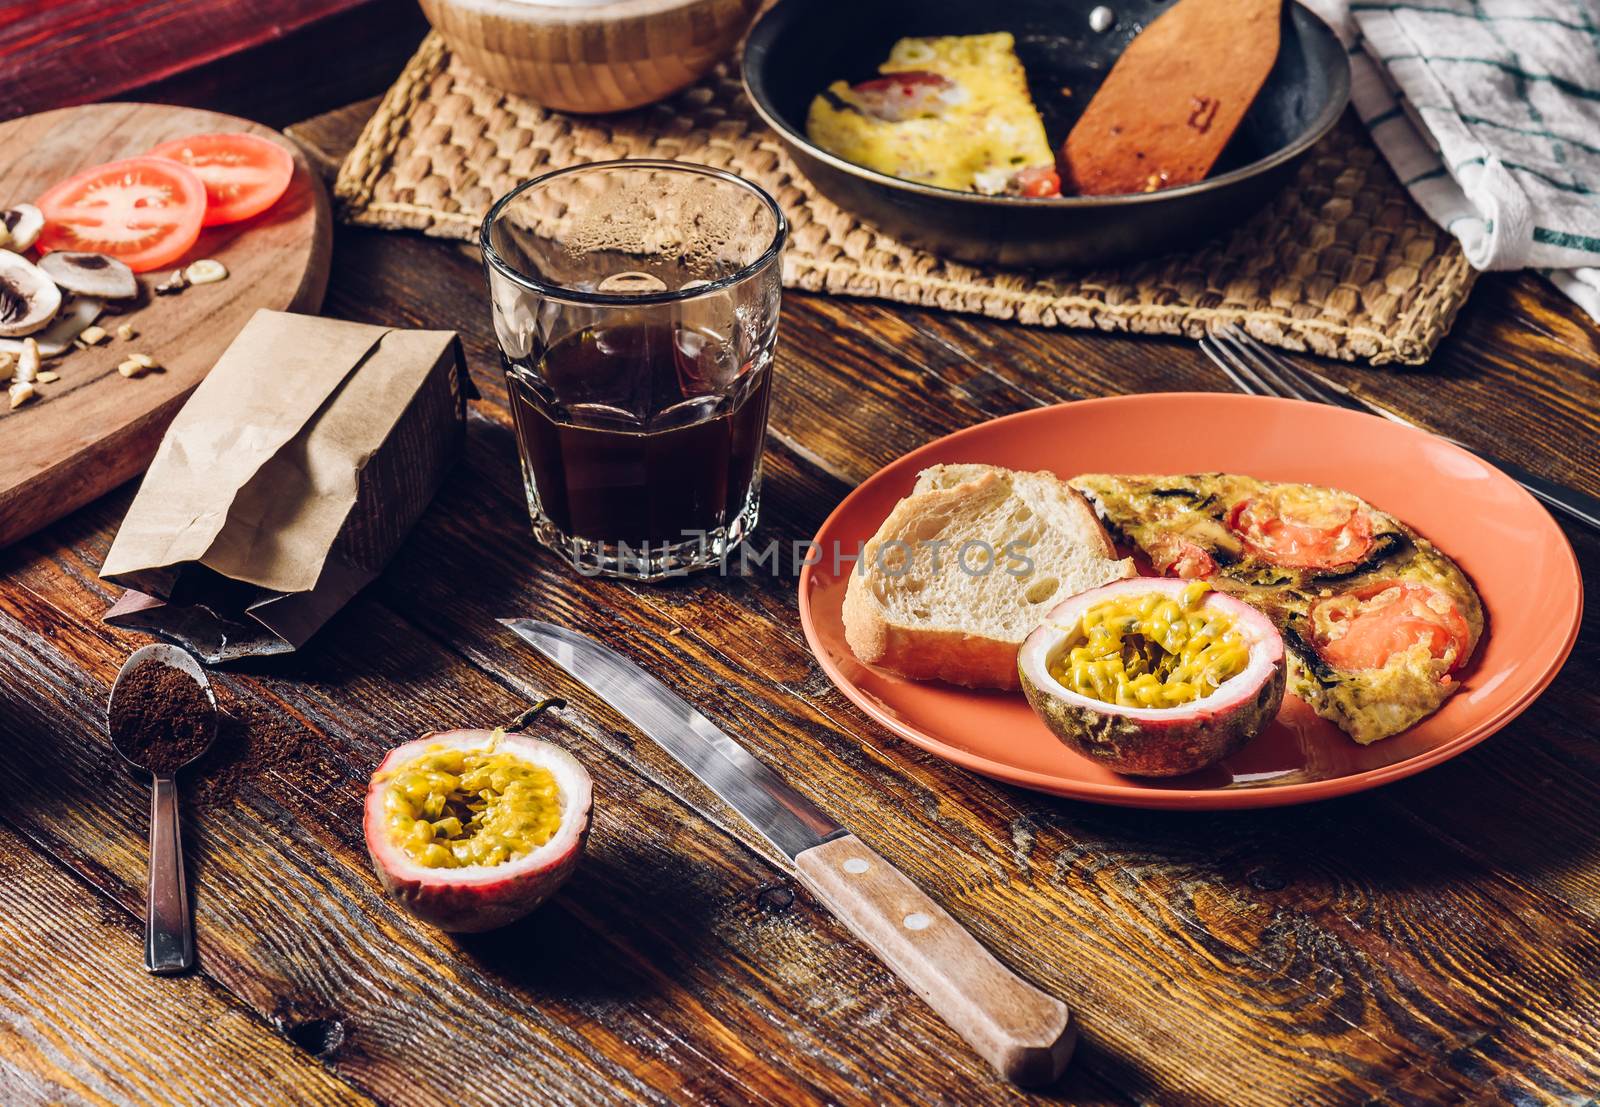 Coffee, Omelette and Granadilla for Breakfast by Seva_blsv